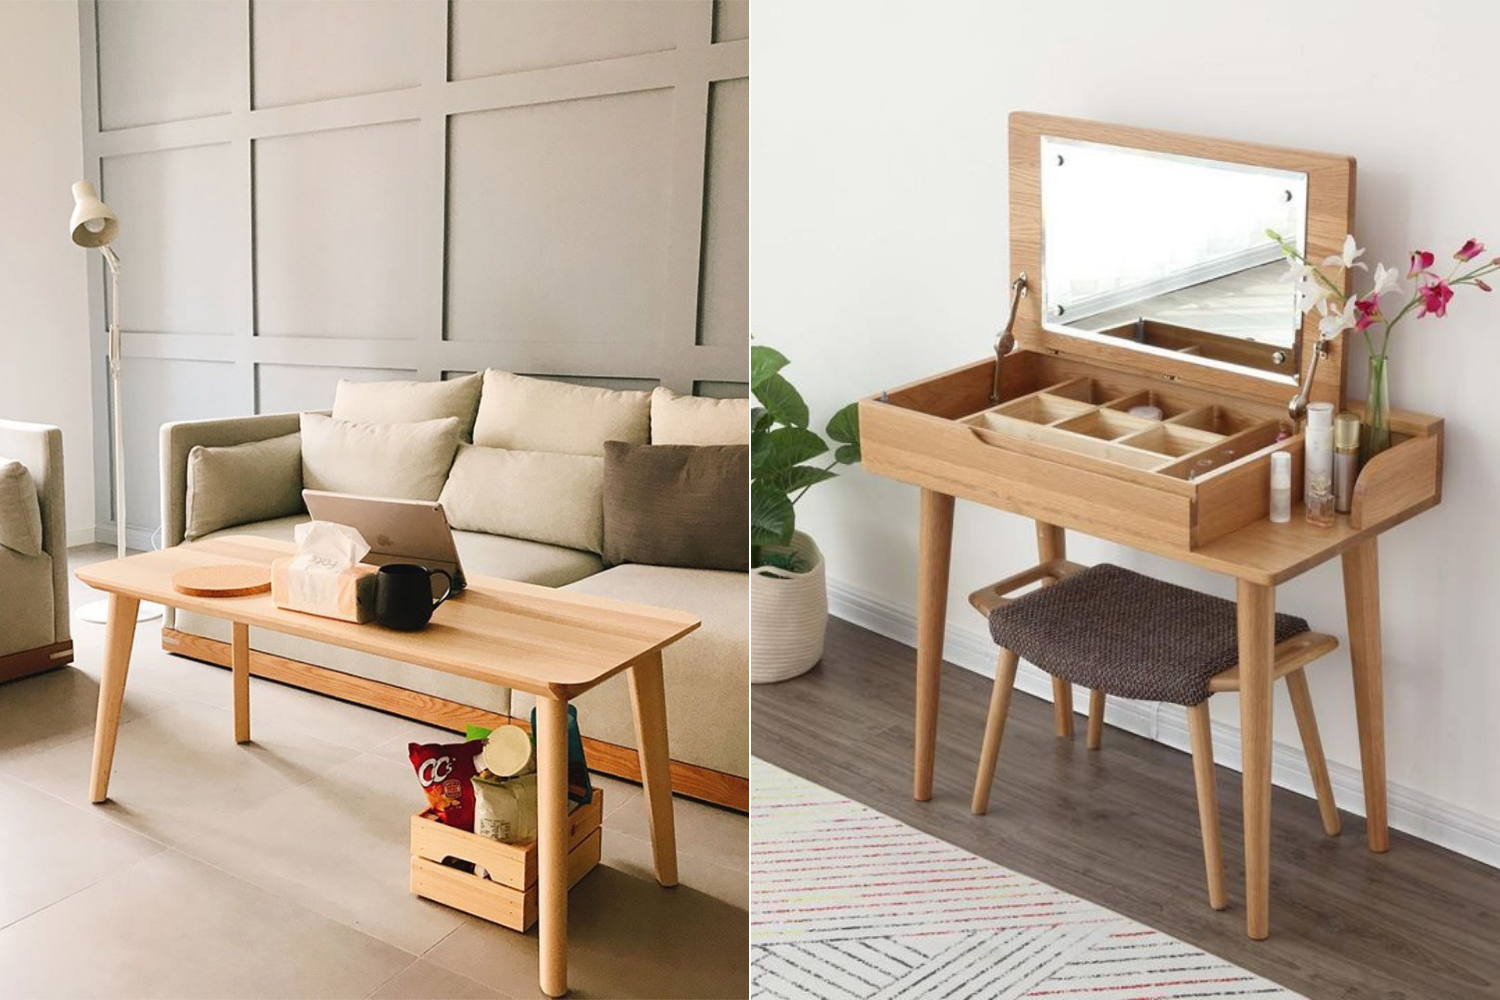 Where to buy furniture online in Singapore - Bedandbasics